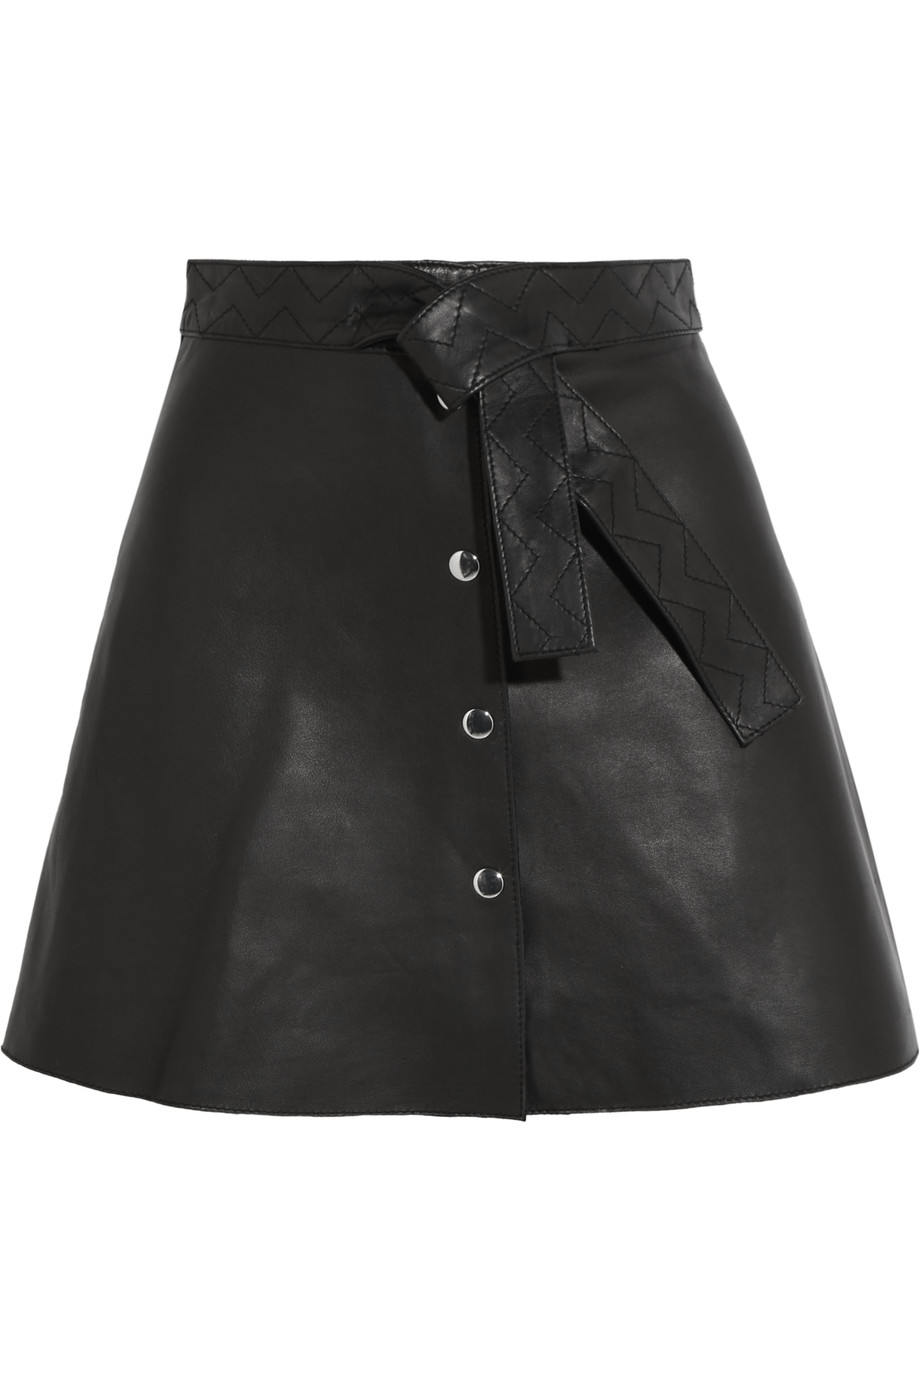 Maje Belted Leather Mini Skirt | ModeSens